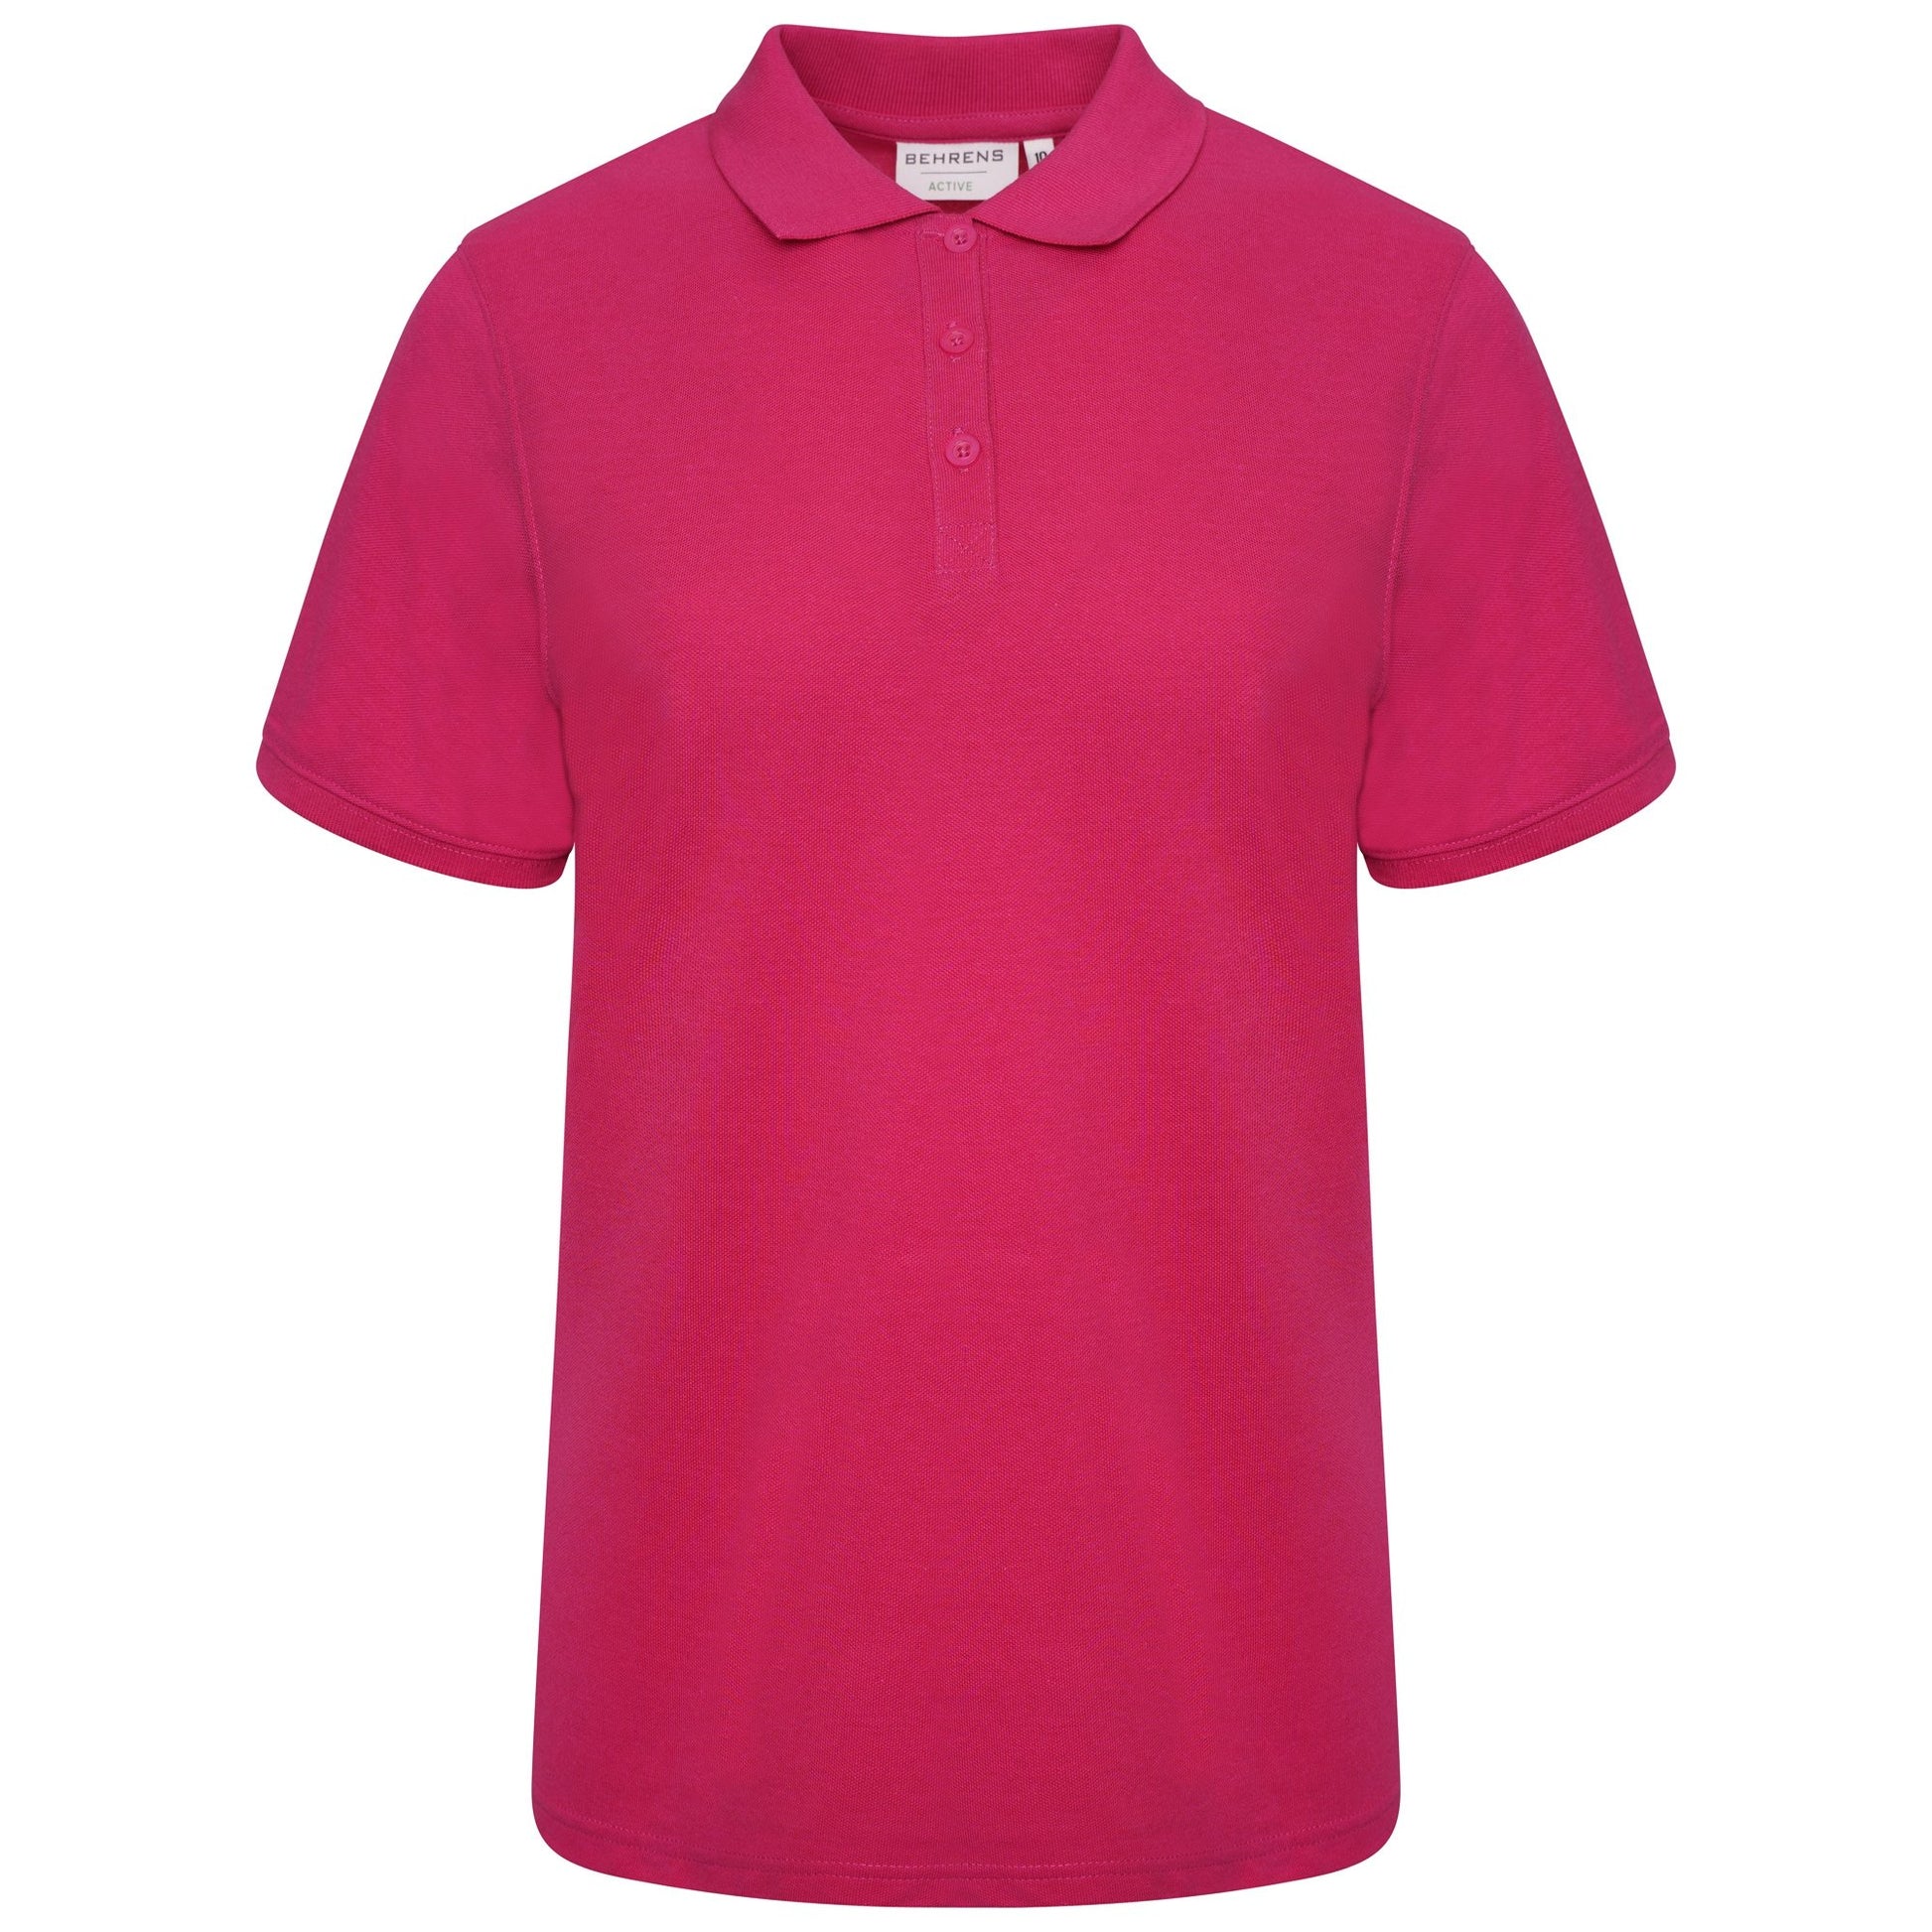 Behrens Ladies Pique Polo Shirt - BEH-4469L - Cerise - UK 8